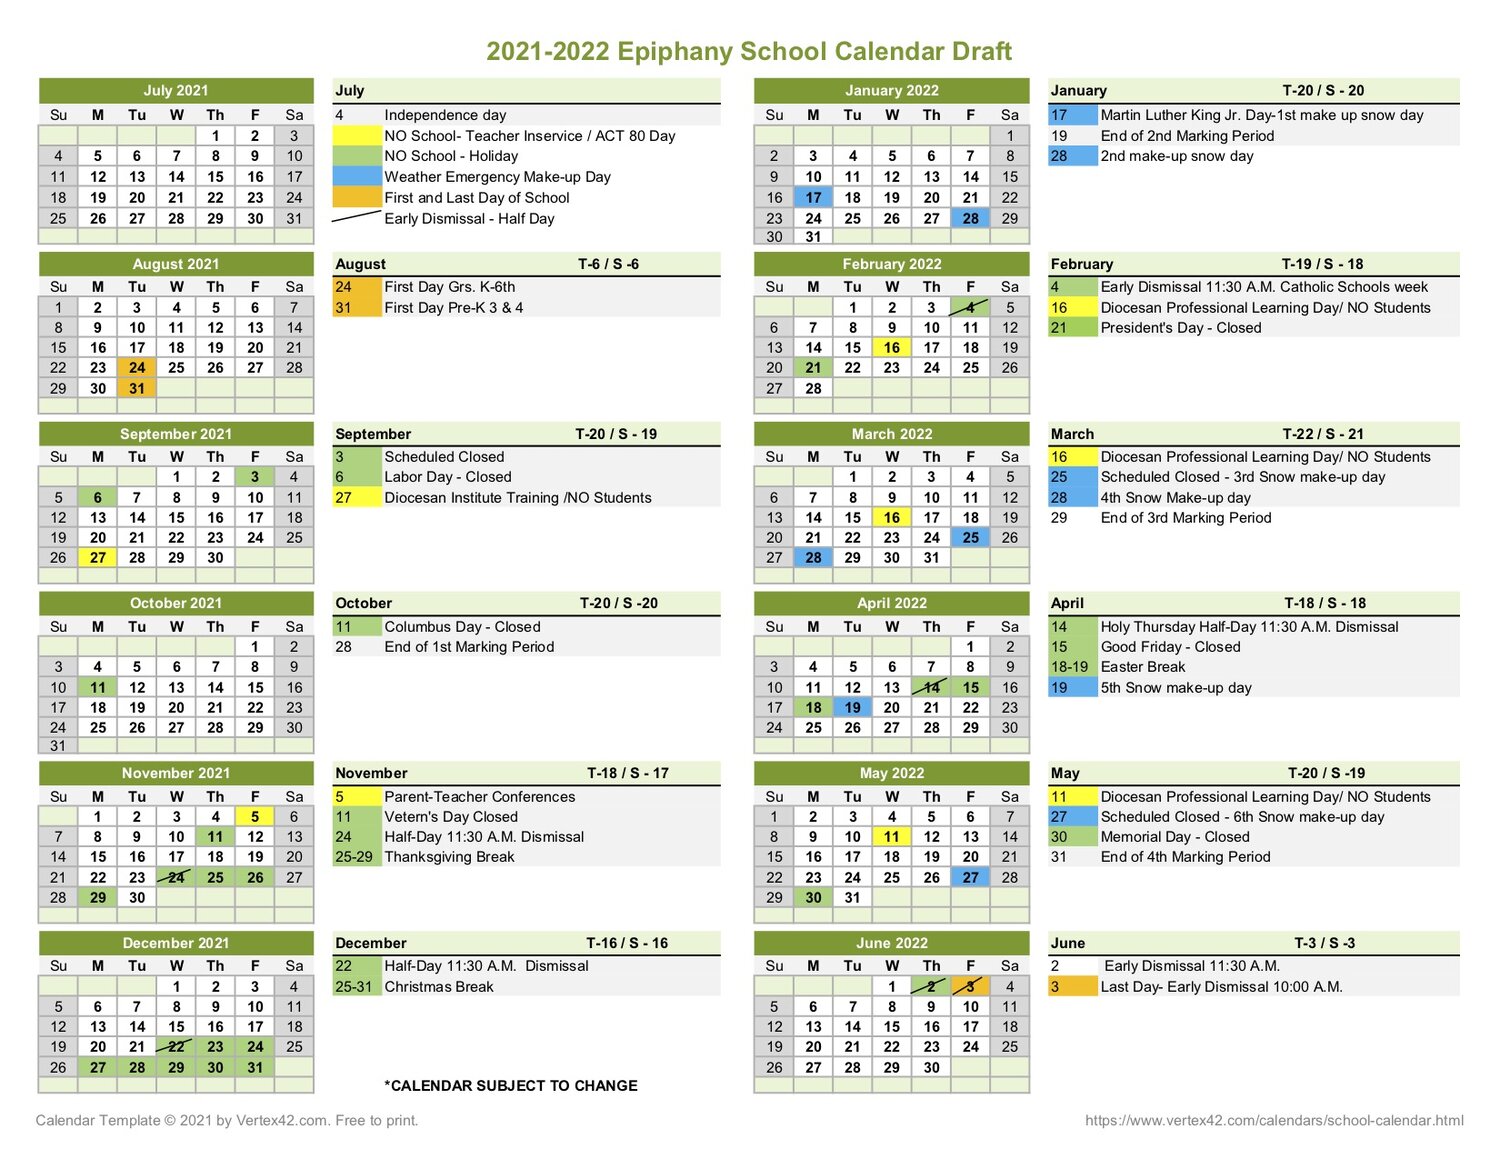 2021-2022-school-calendar-draft-the-epiphany-school